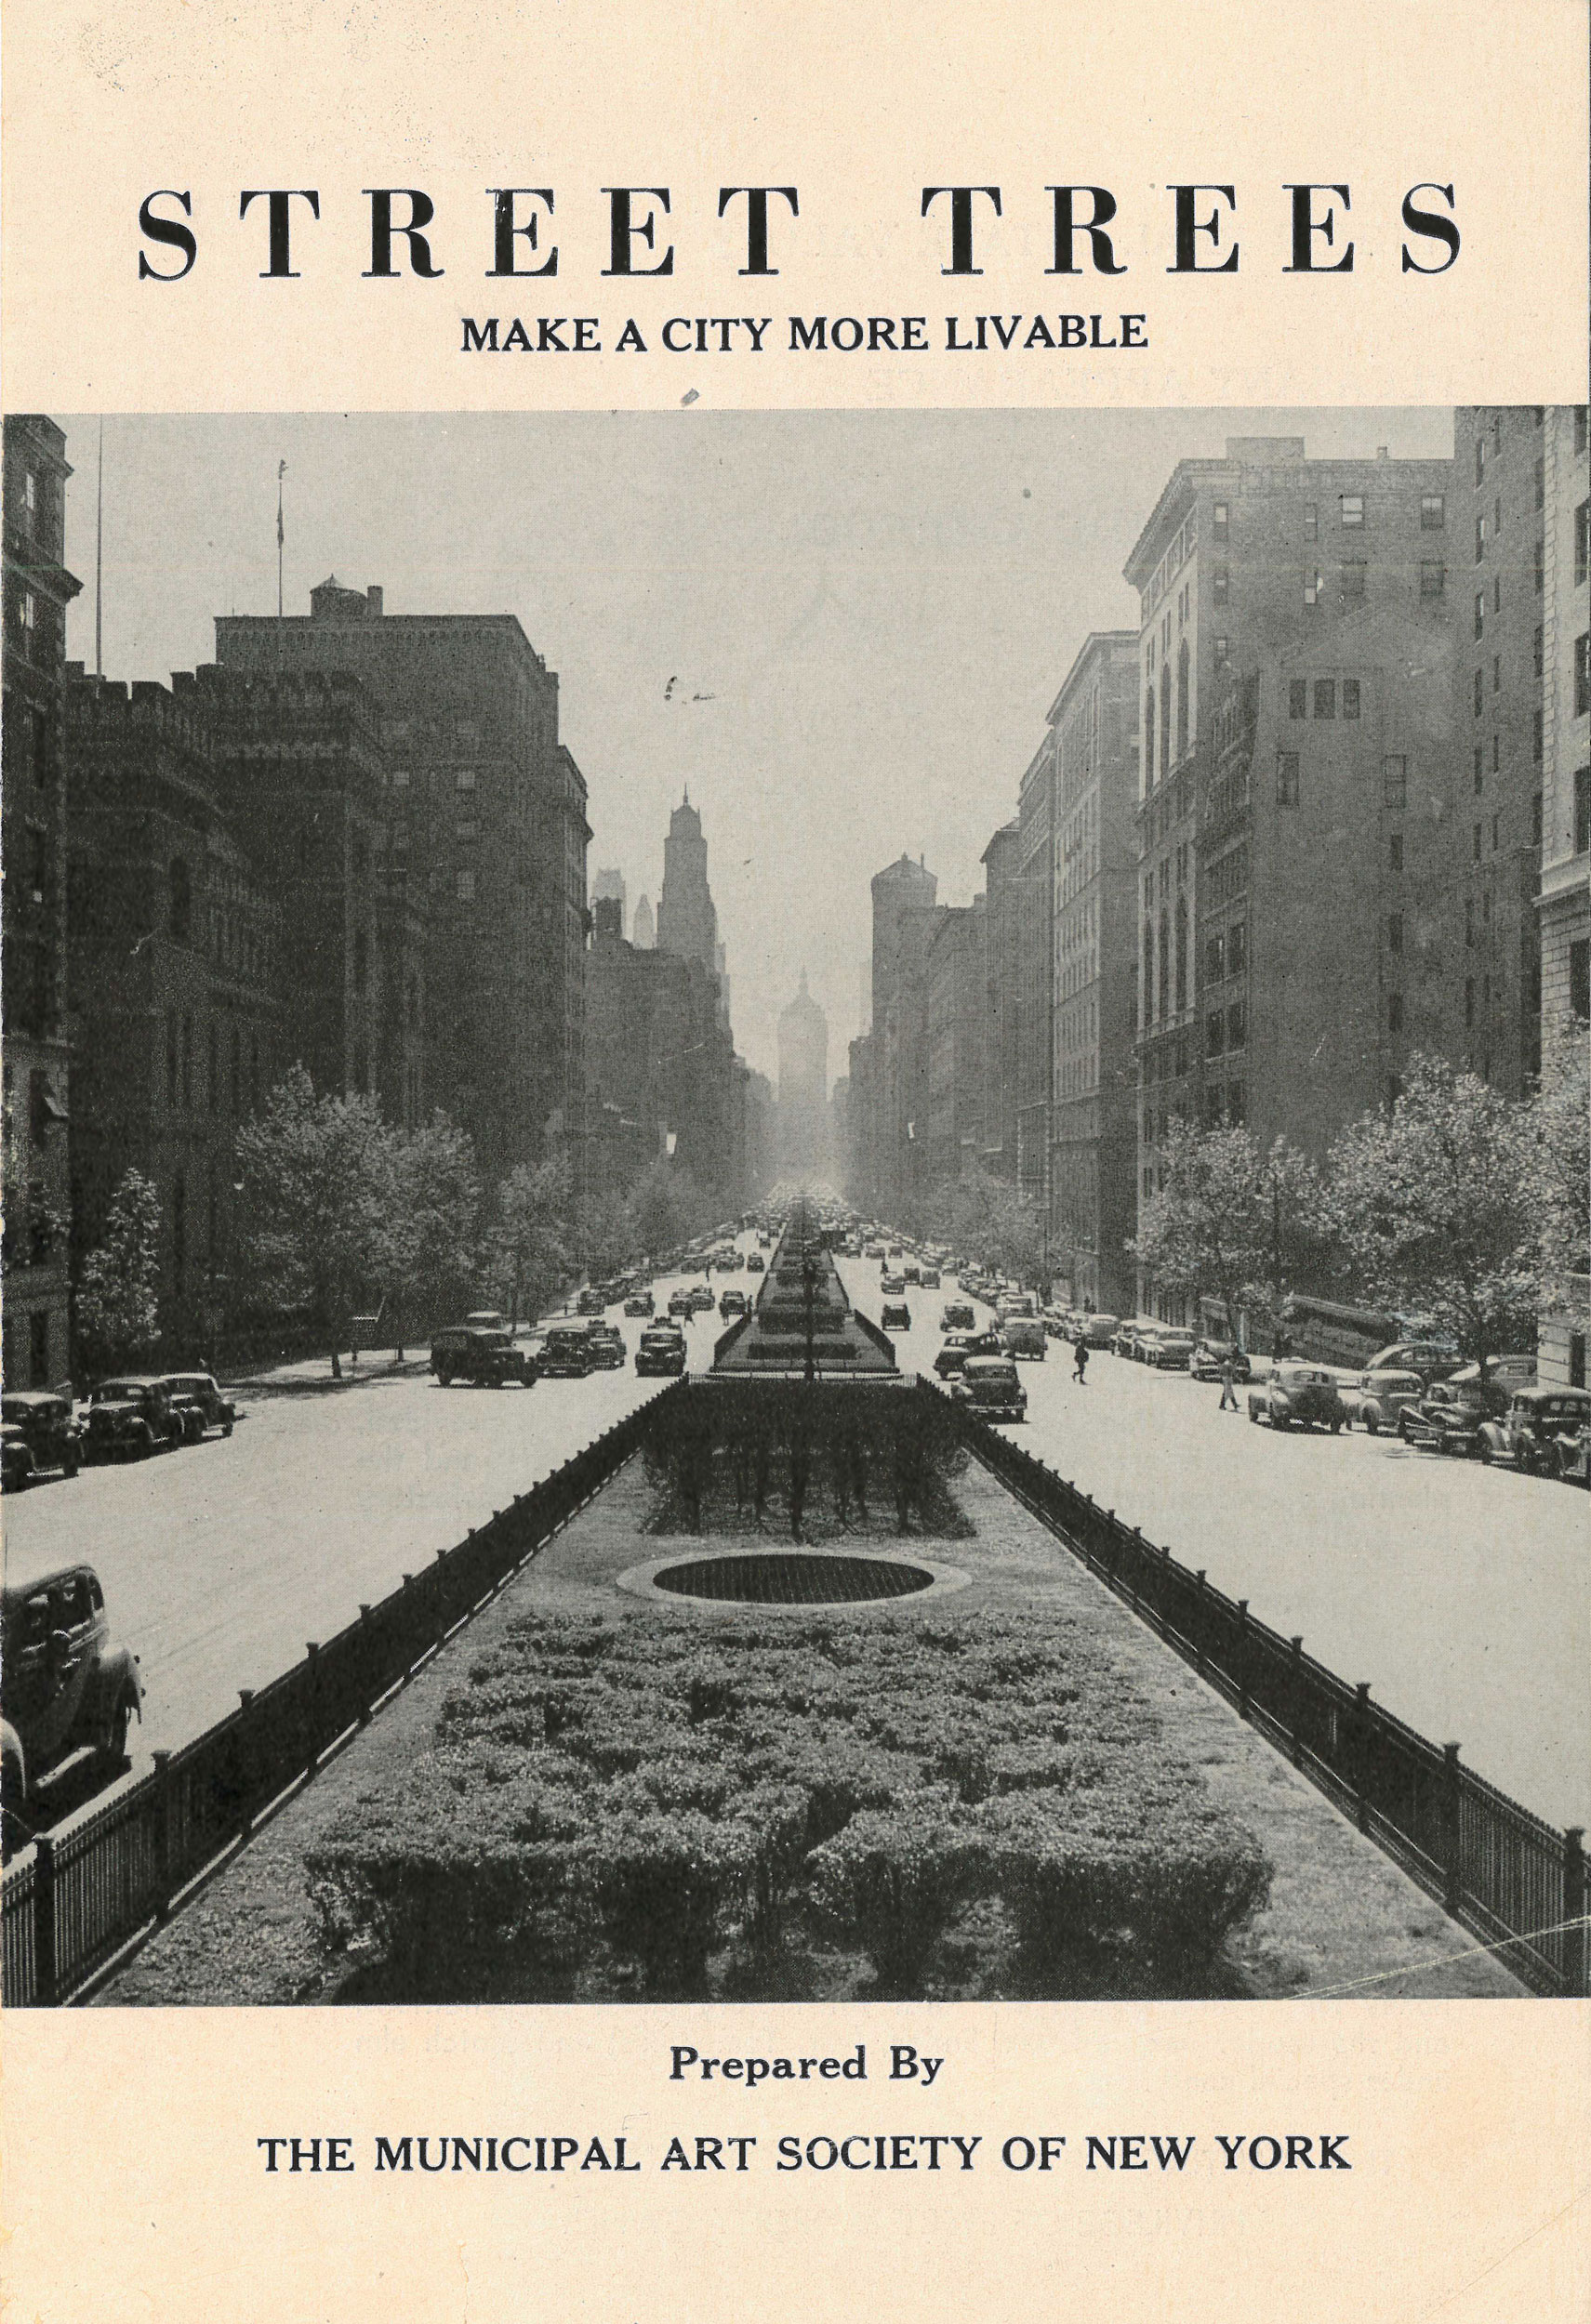 Toward a Livable City: New York and the Municipal Art Society (1893-Present)